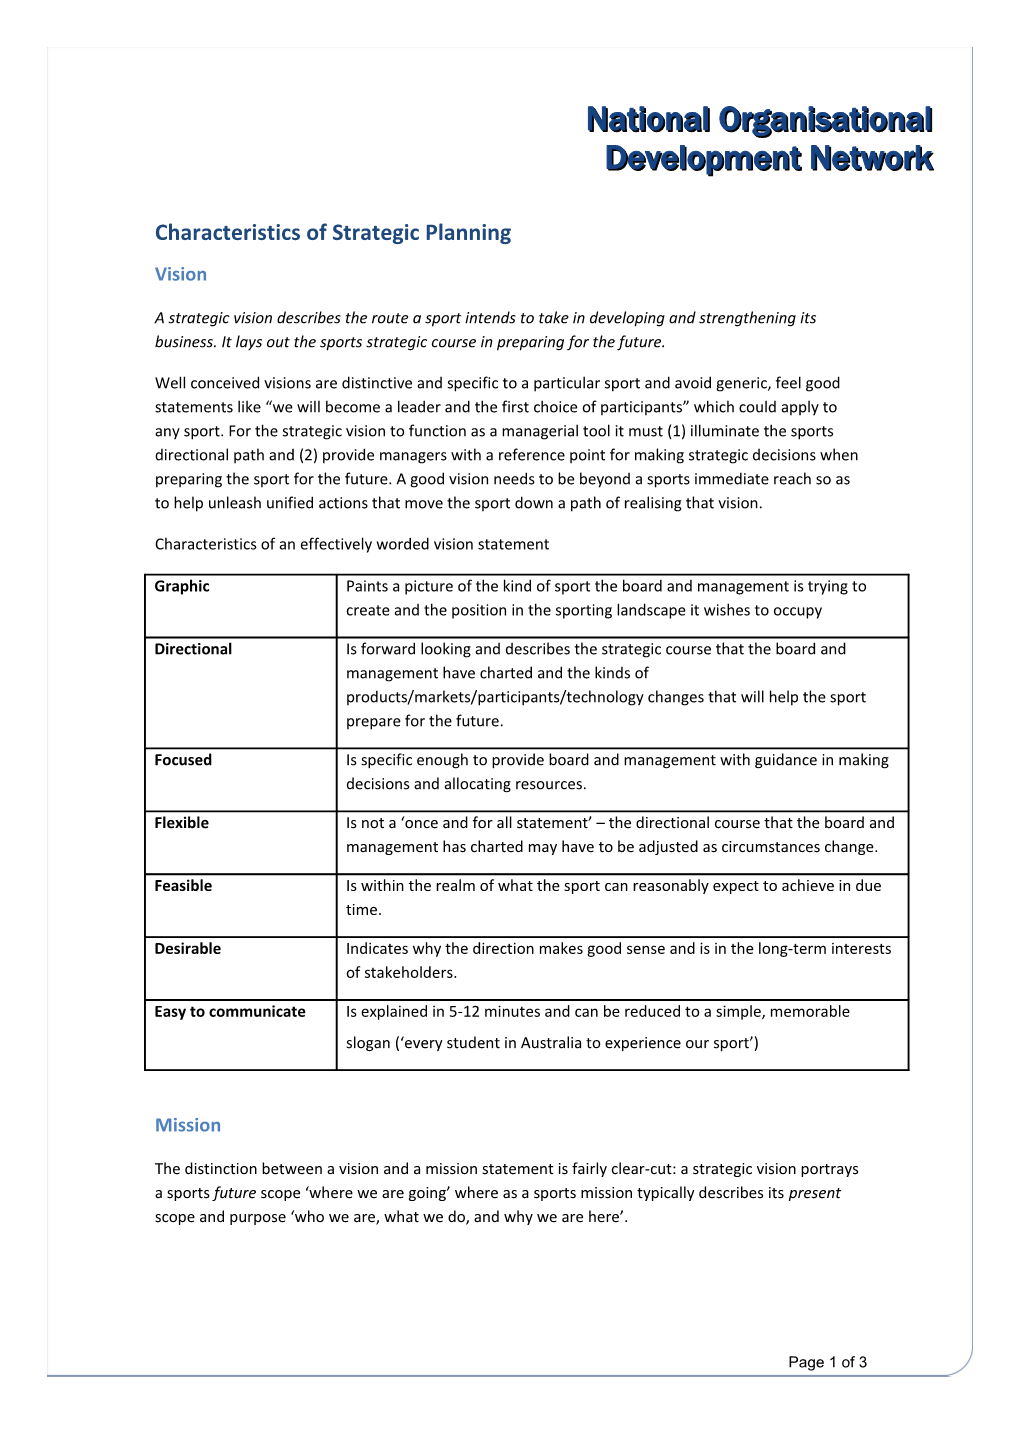 Characteristics of Strategic Planning